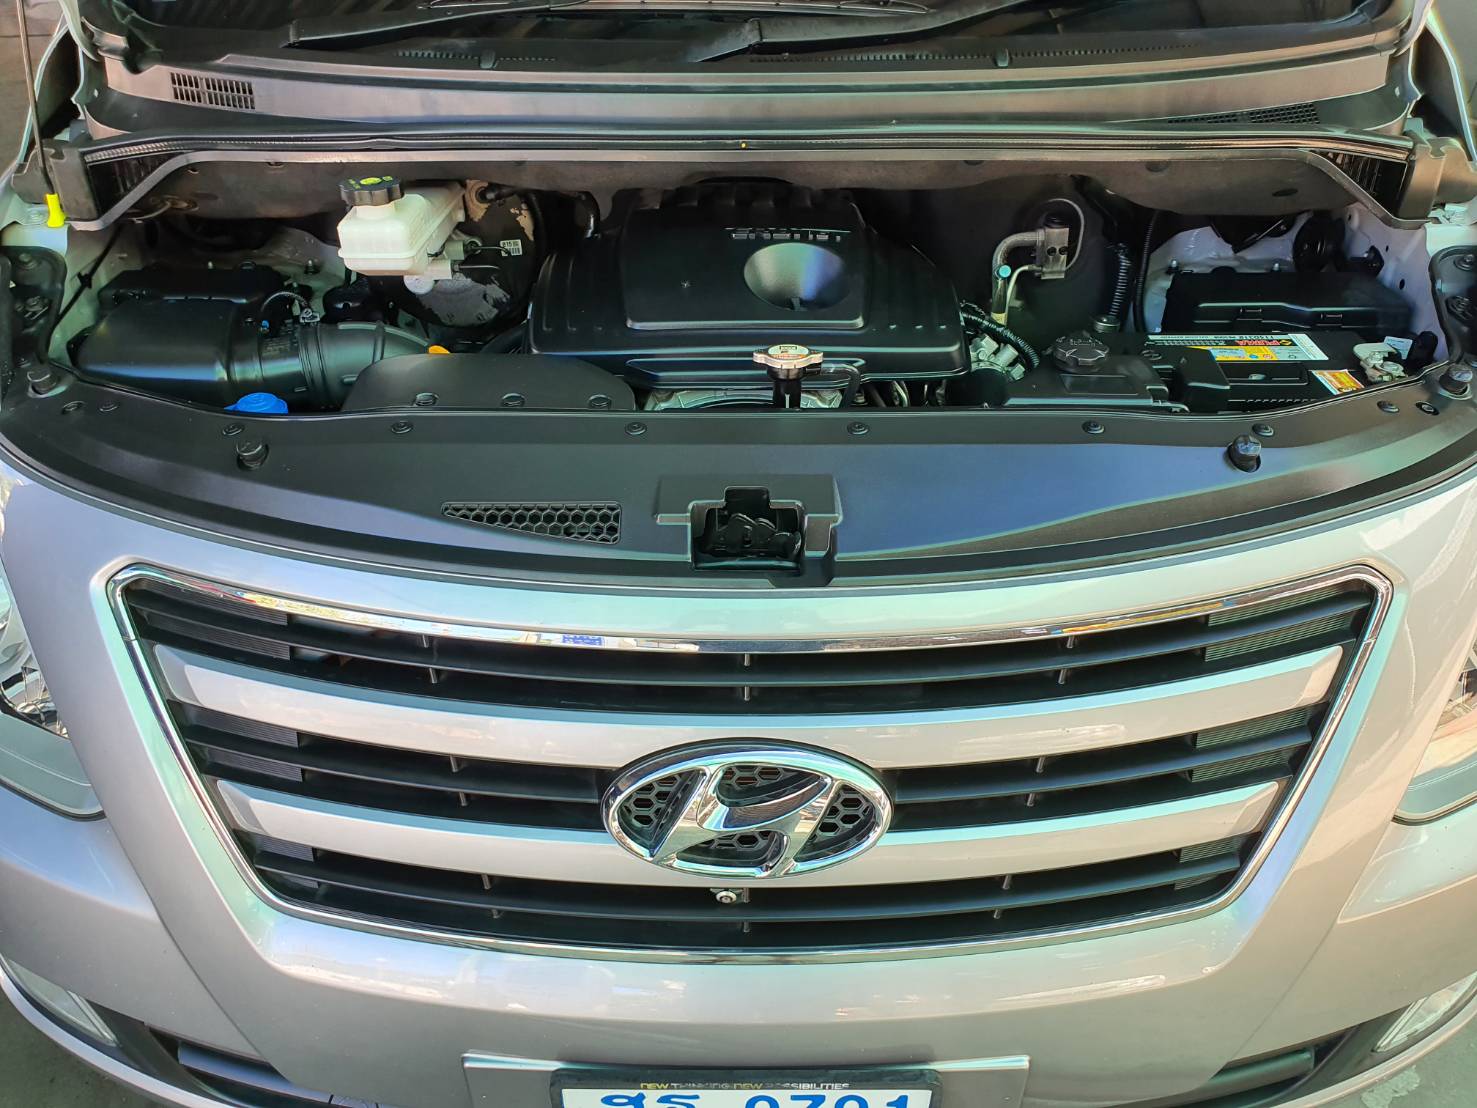 Hyundai H1 Touring ปี 2017 สีเทา เกียร์Auto มือ1 มีกล้องหน้า-หลัง วิ่งน้อยเช็คศูนย์